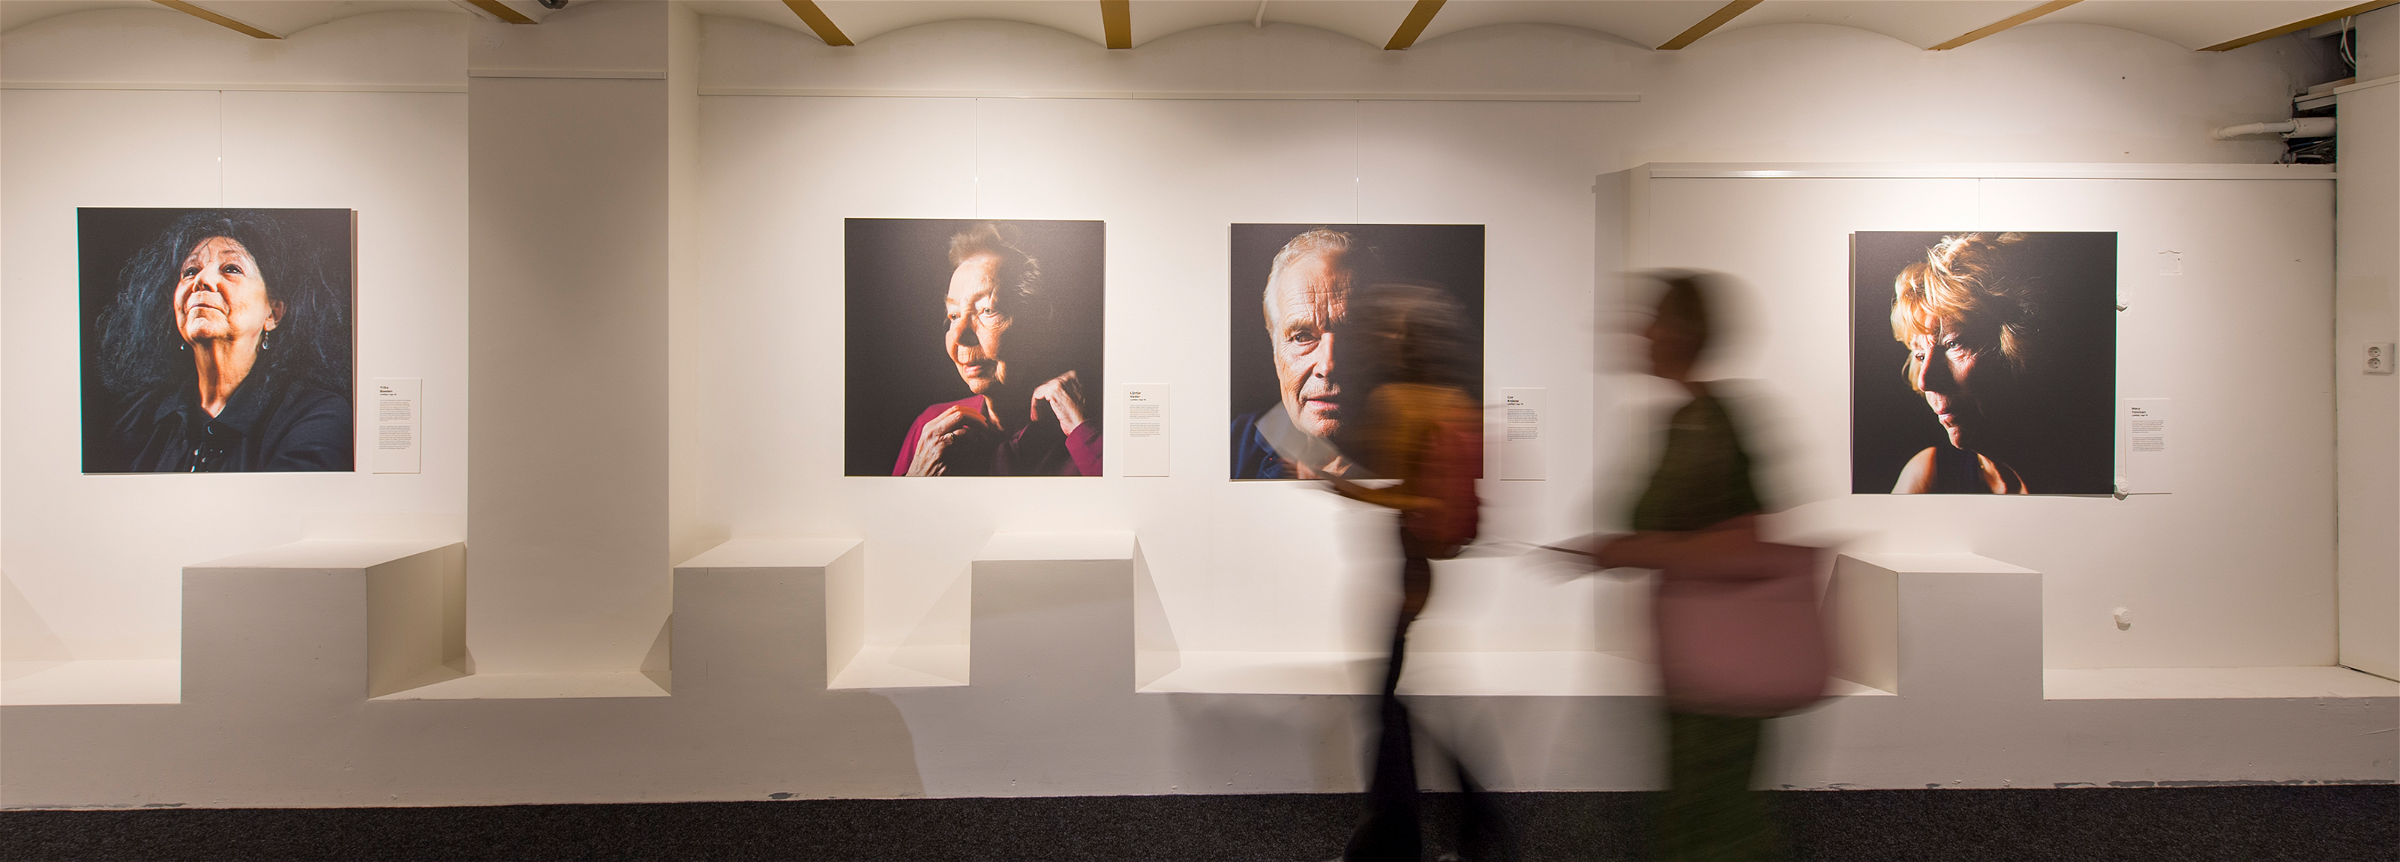 NL tentoonstelling portretten